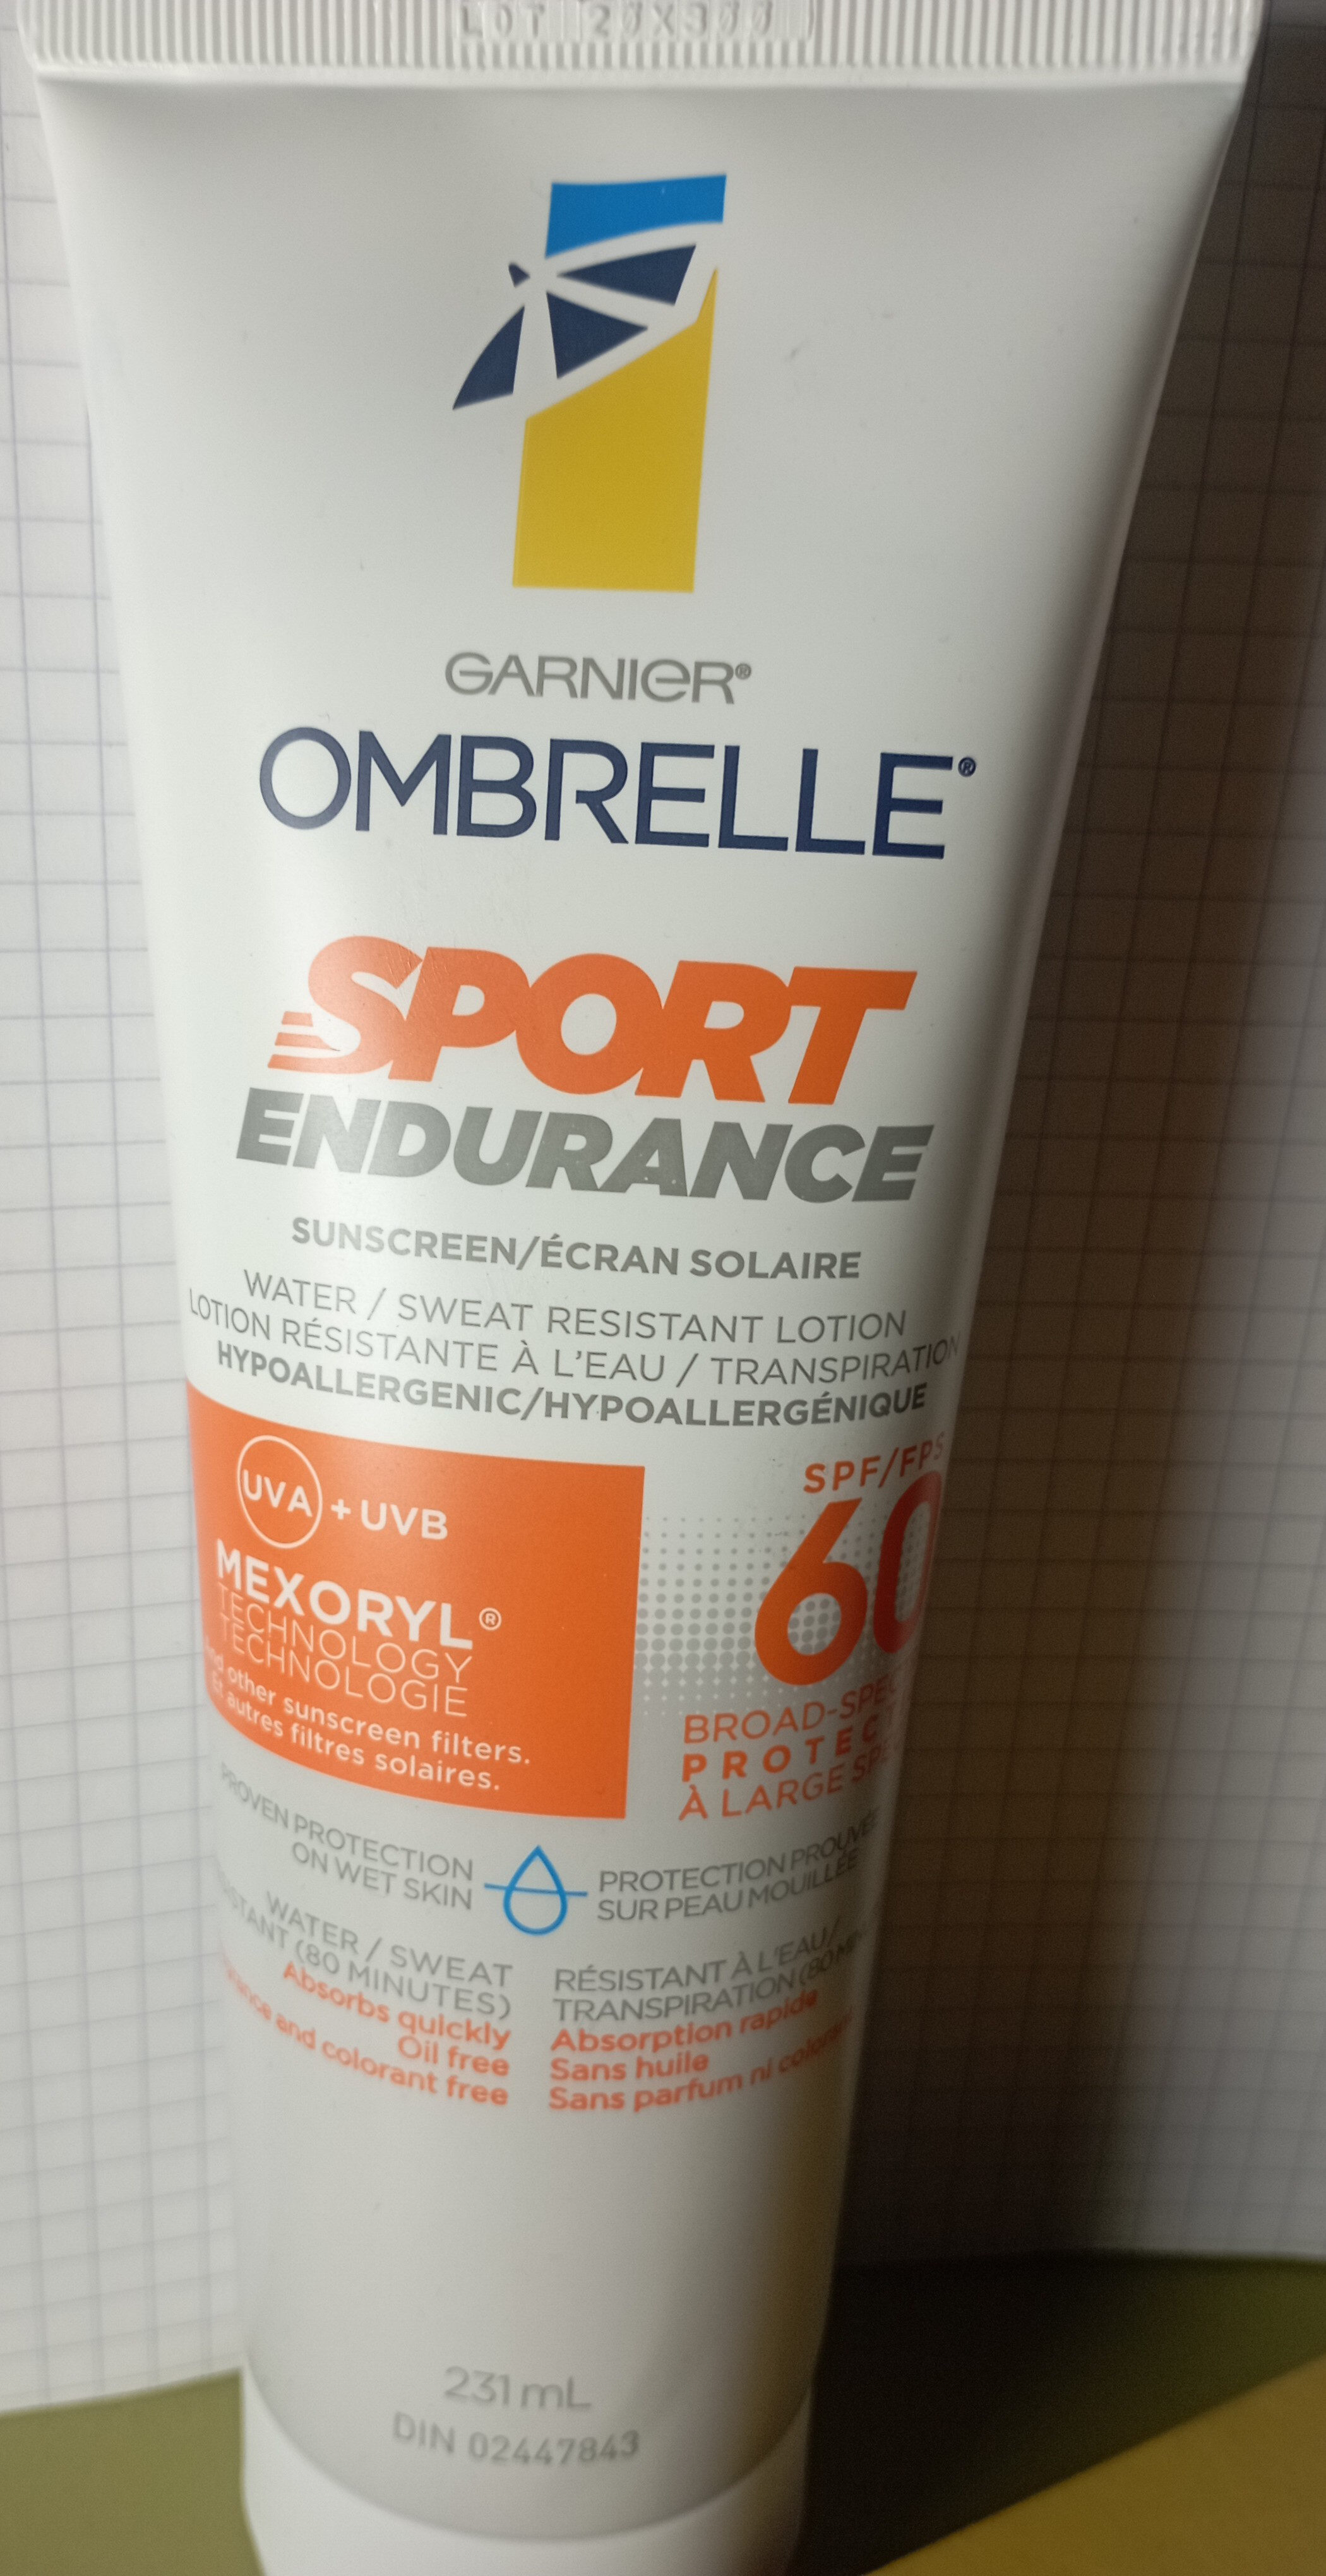 Ombrelle endurance sport - Product - fr